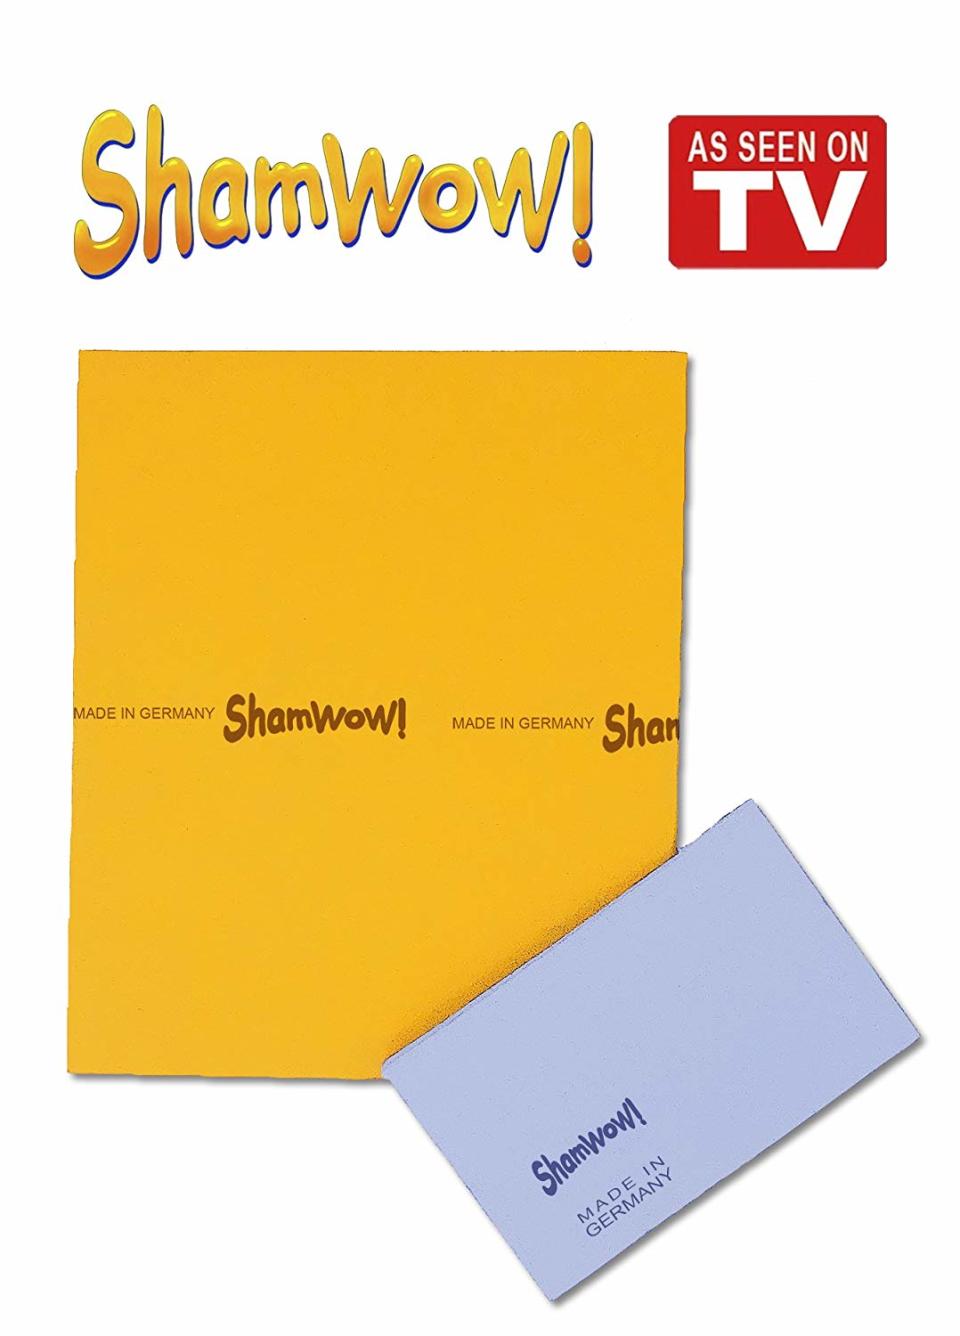 as seen on TV products the original shamwow shammy